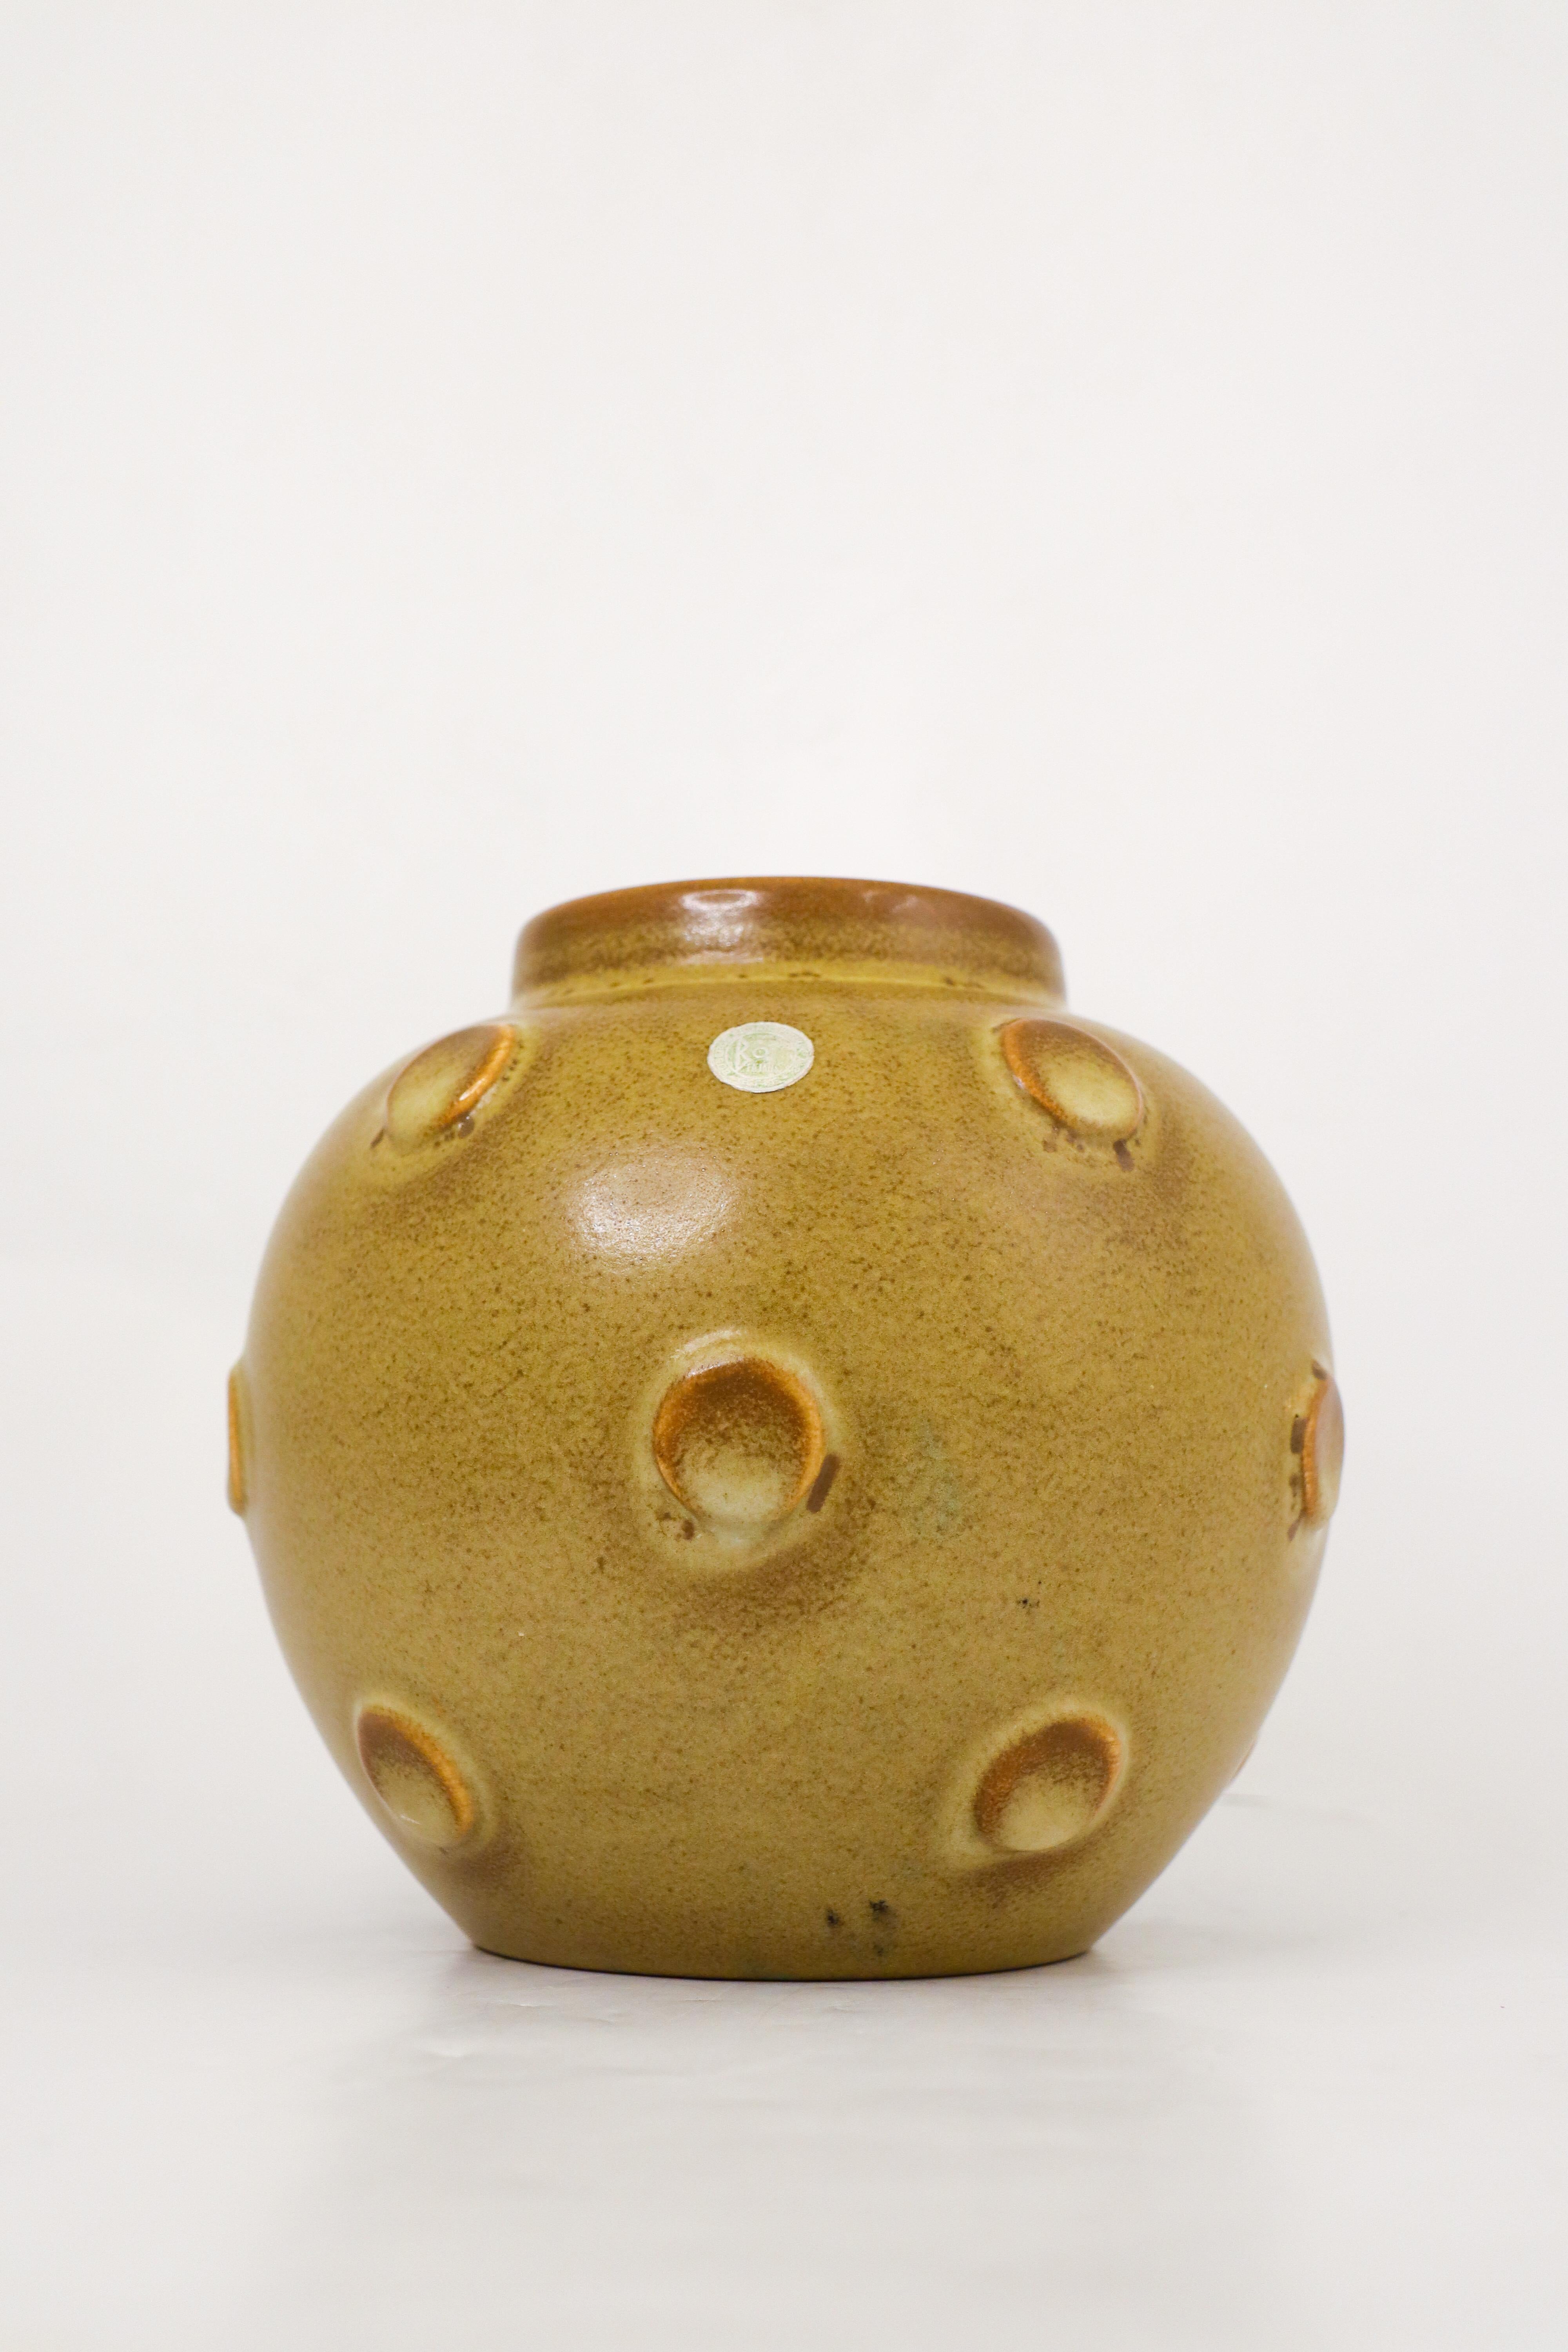 Glazed Eva Jancke-Björk - Round, Dark Yellow Vase with relief - Bo Fajans 1940s For Sale